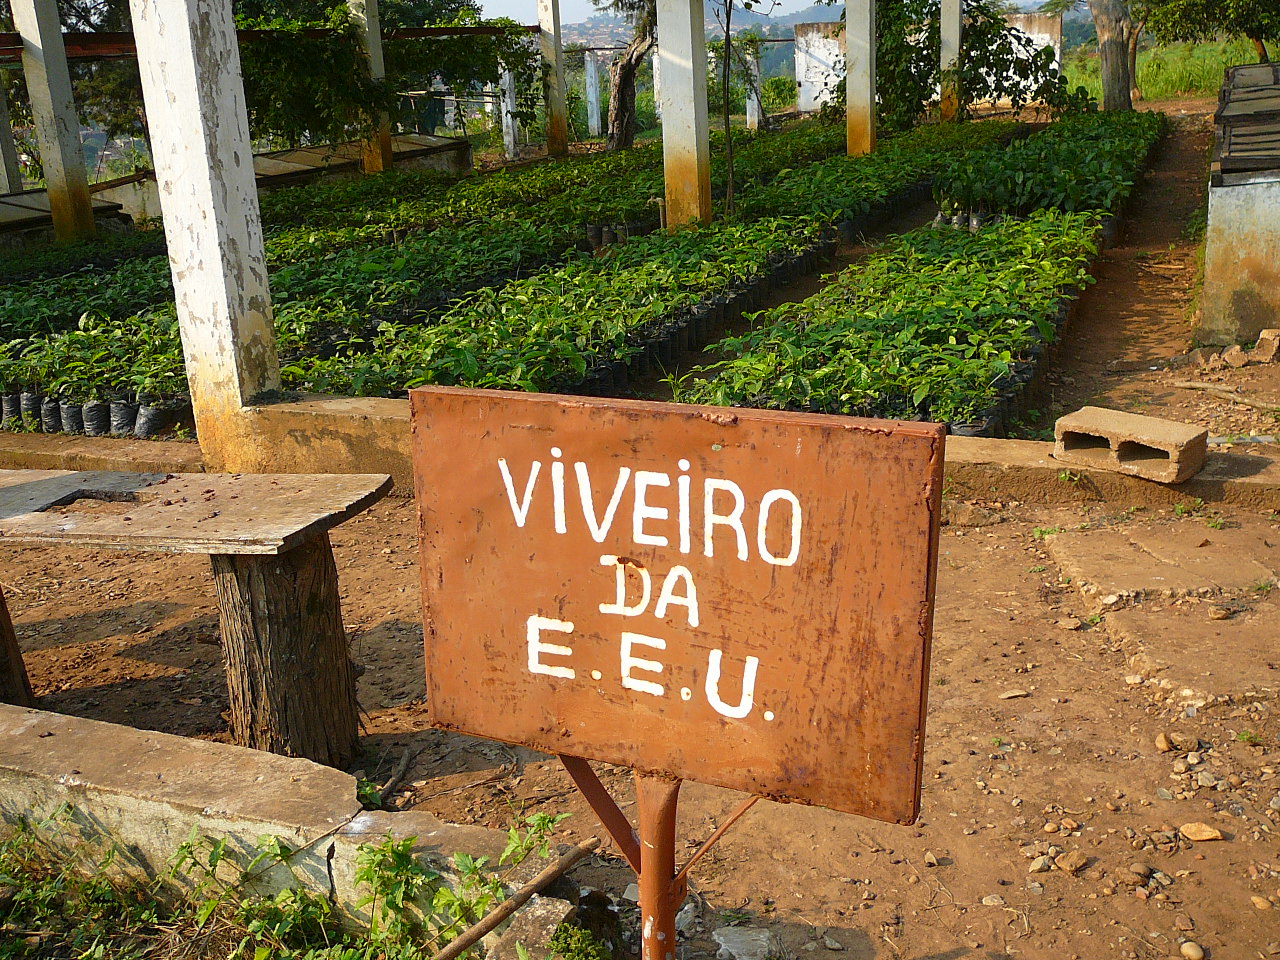 Coffee nursery in Uige, Angola